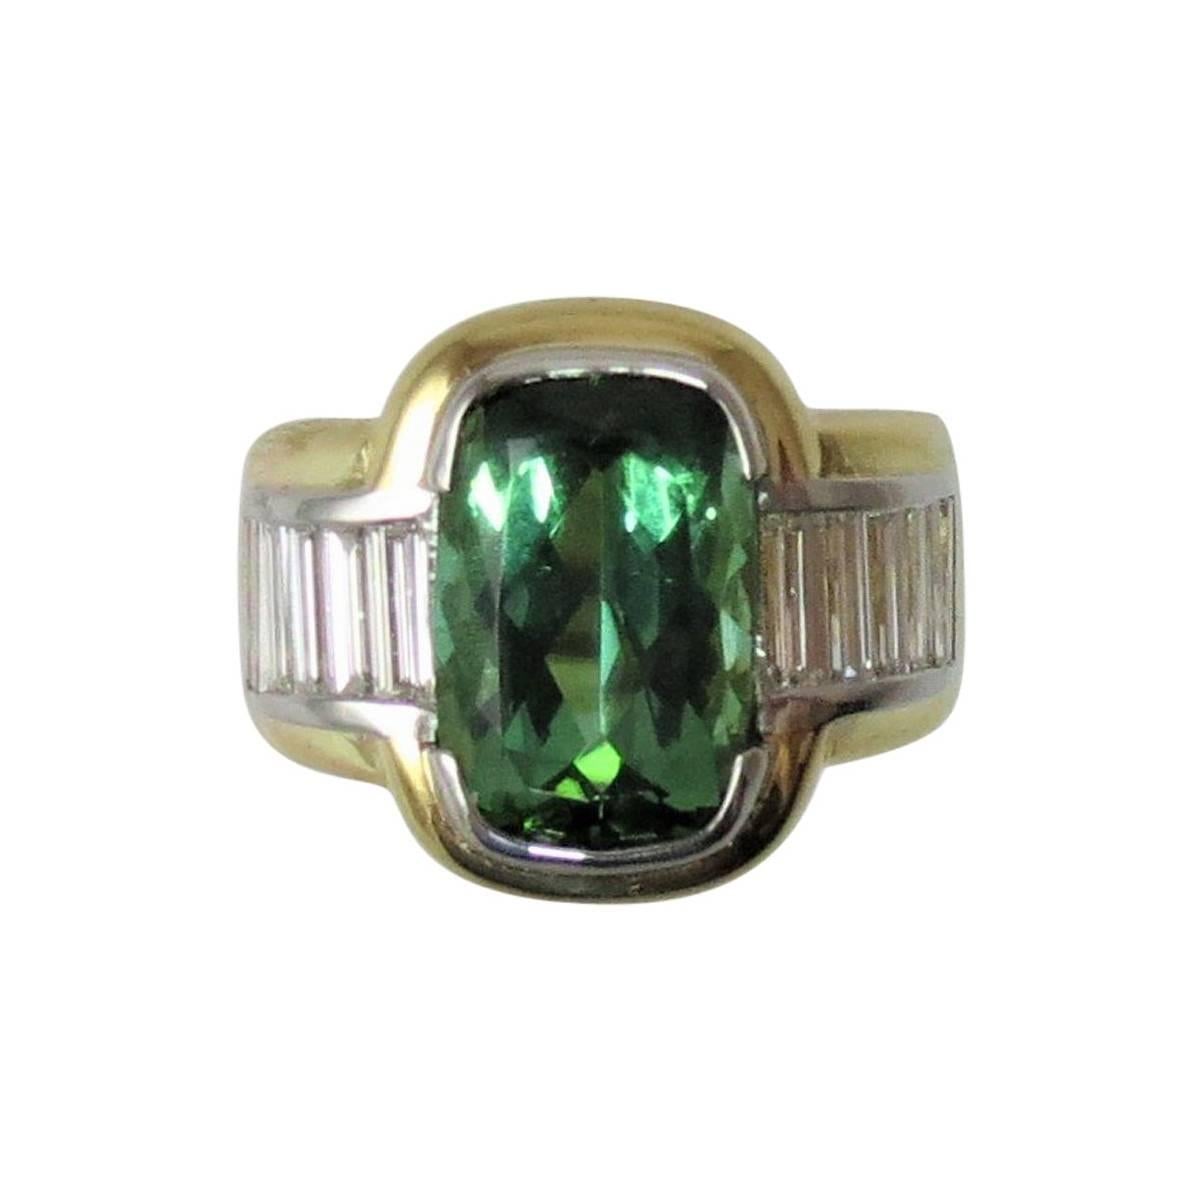  Green Tourmaline  Diamond Ring by Susan Berman For Sale